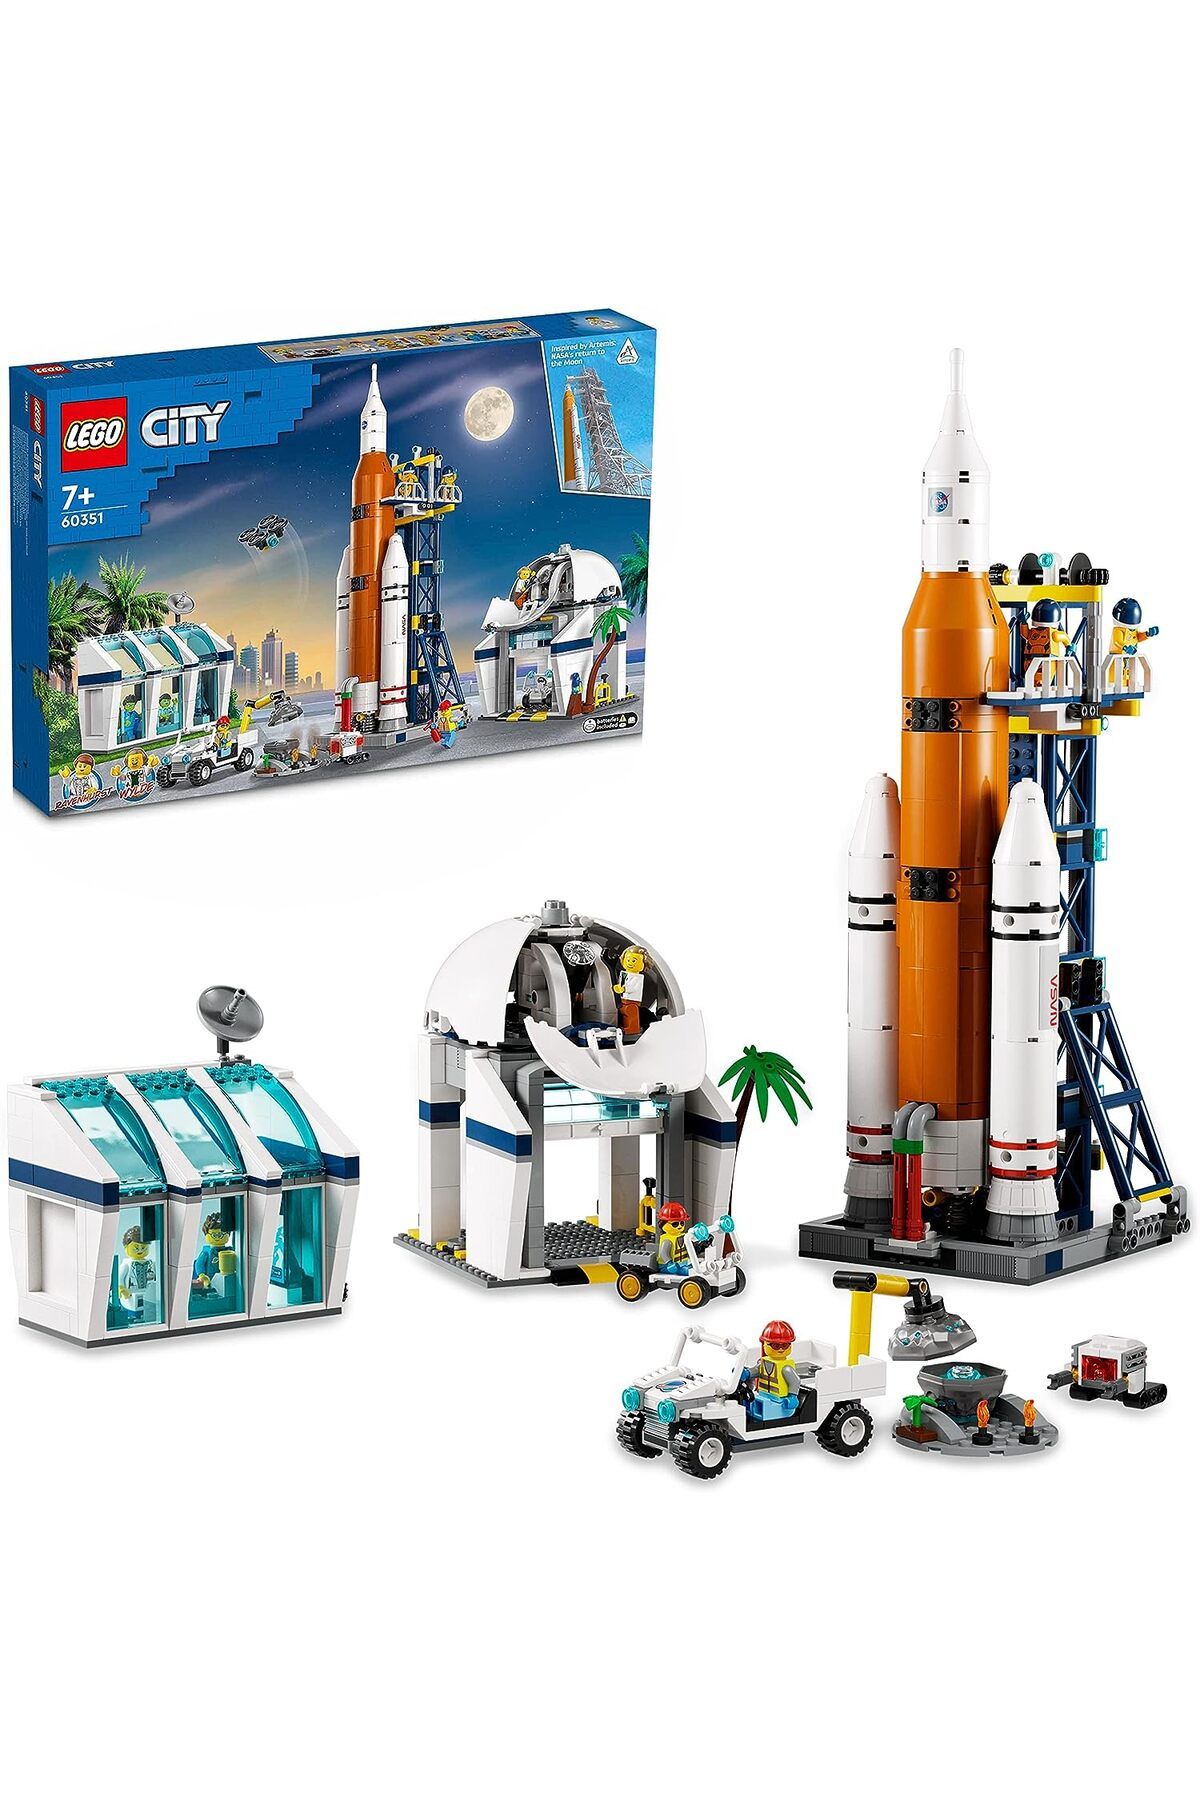 ست 60351 با 1010 قطعه City Rocket Launch Center  LEGO لگو